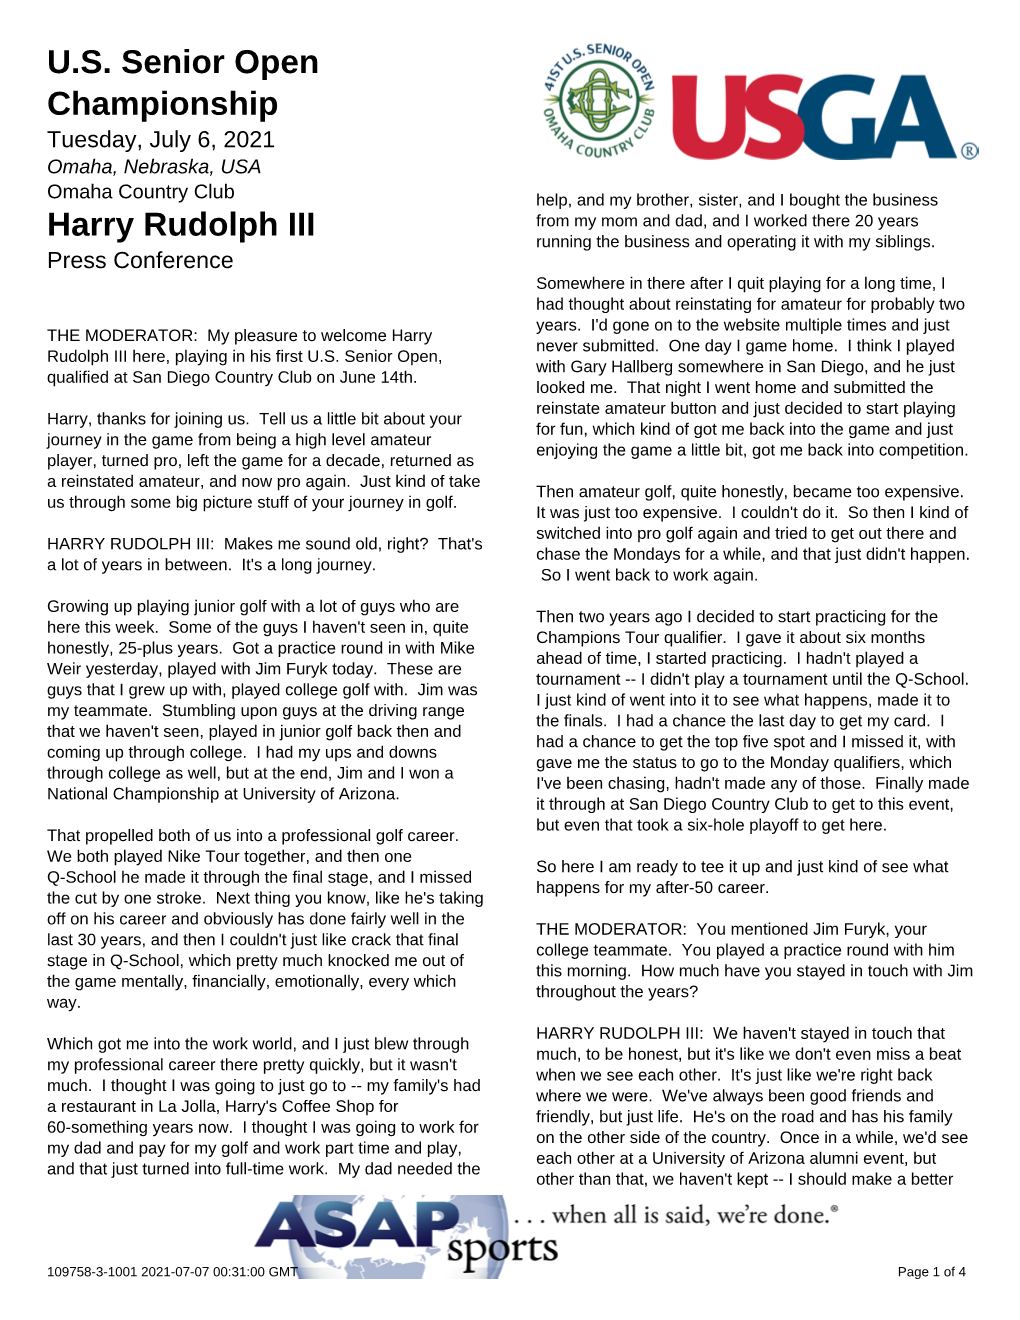 U.S. Senior Open Championship Harry Rudolph